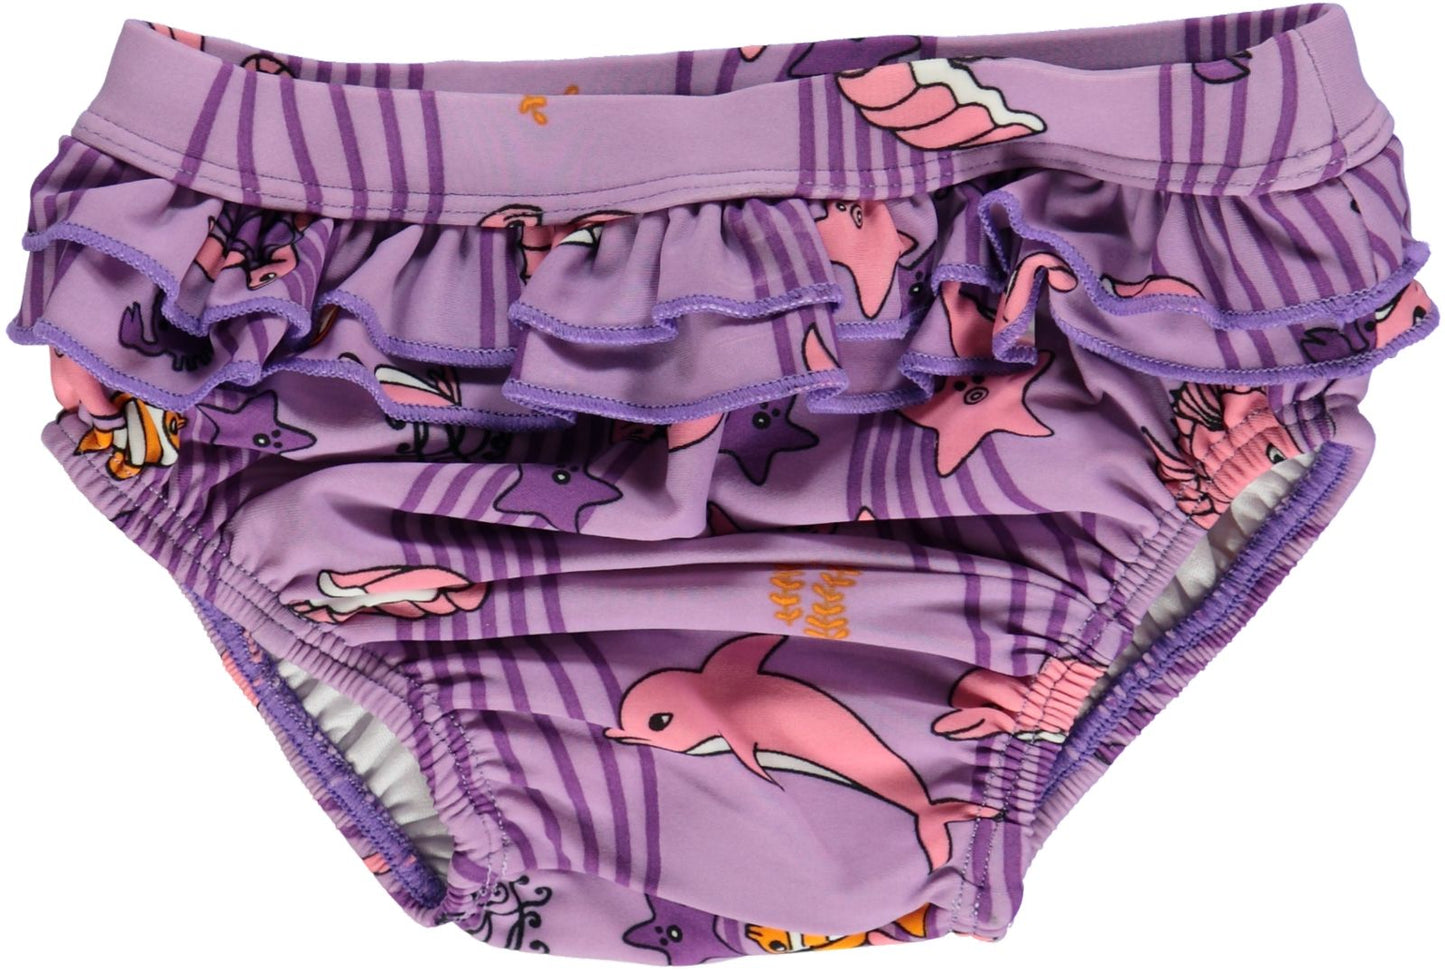 UV50 Diaper swimpants with skirt and Ocean